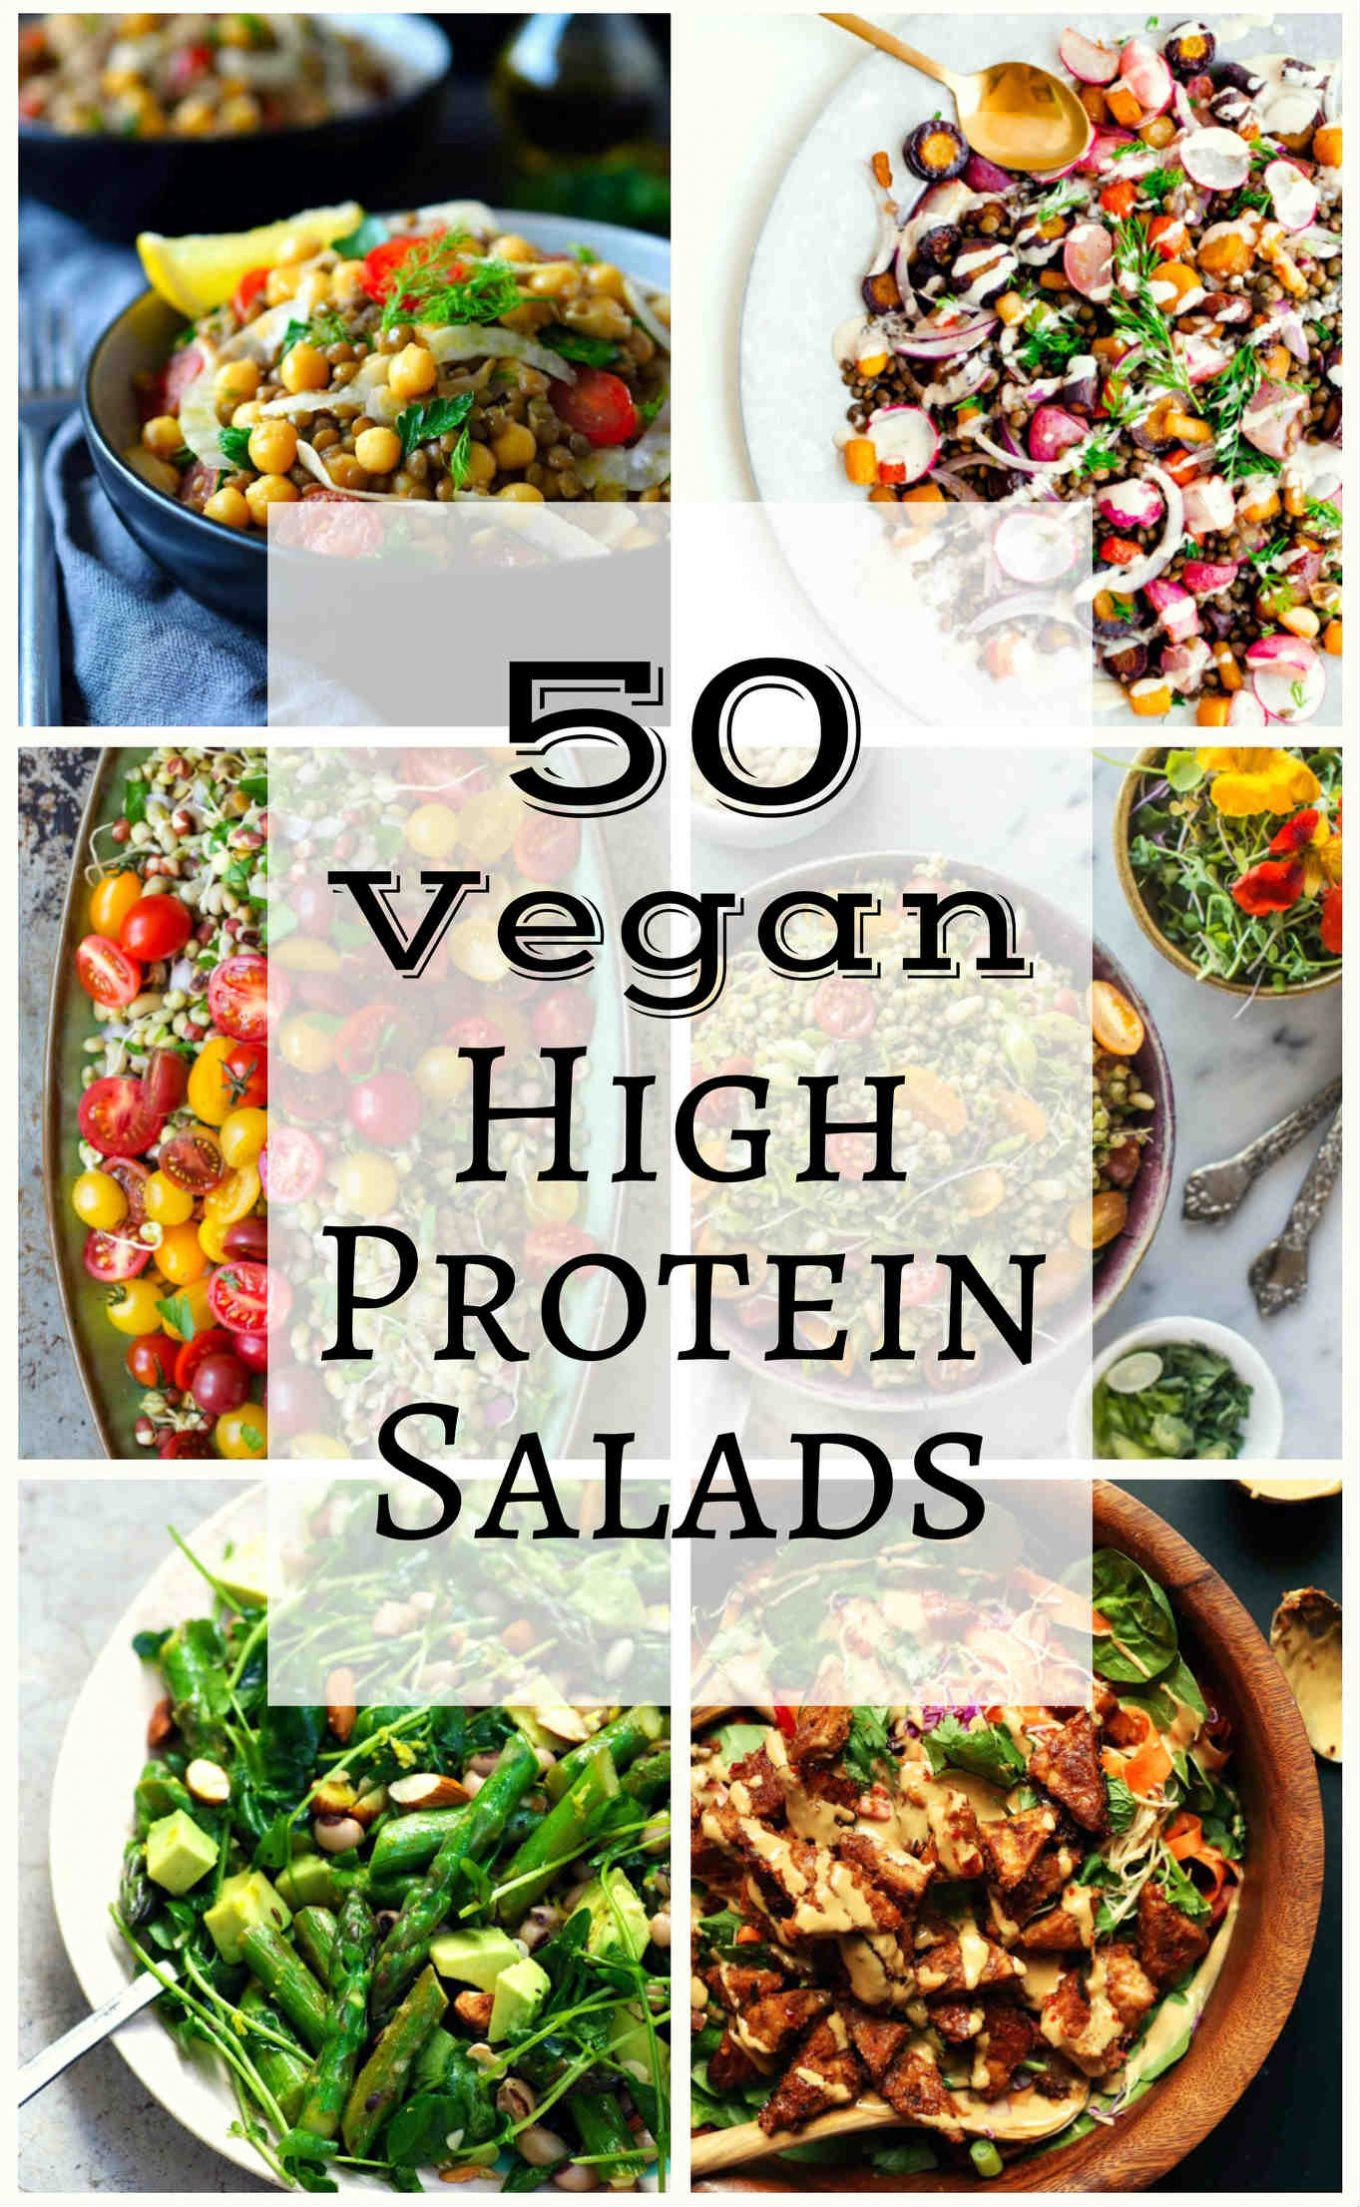 Vegan Protein Salad Recipes
 50 Vegan High Protein Salads